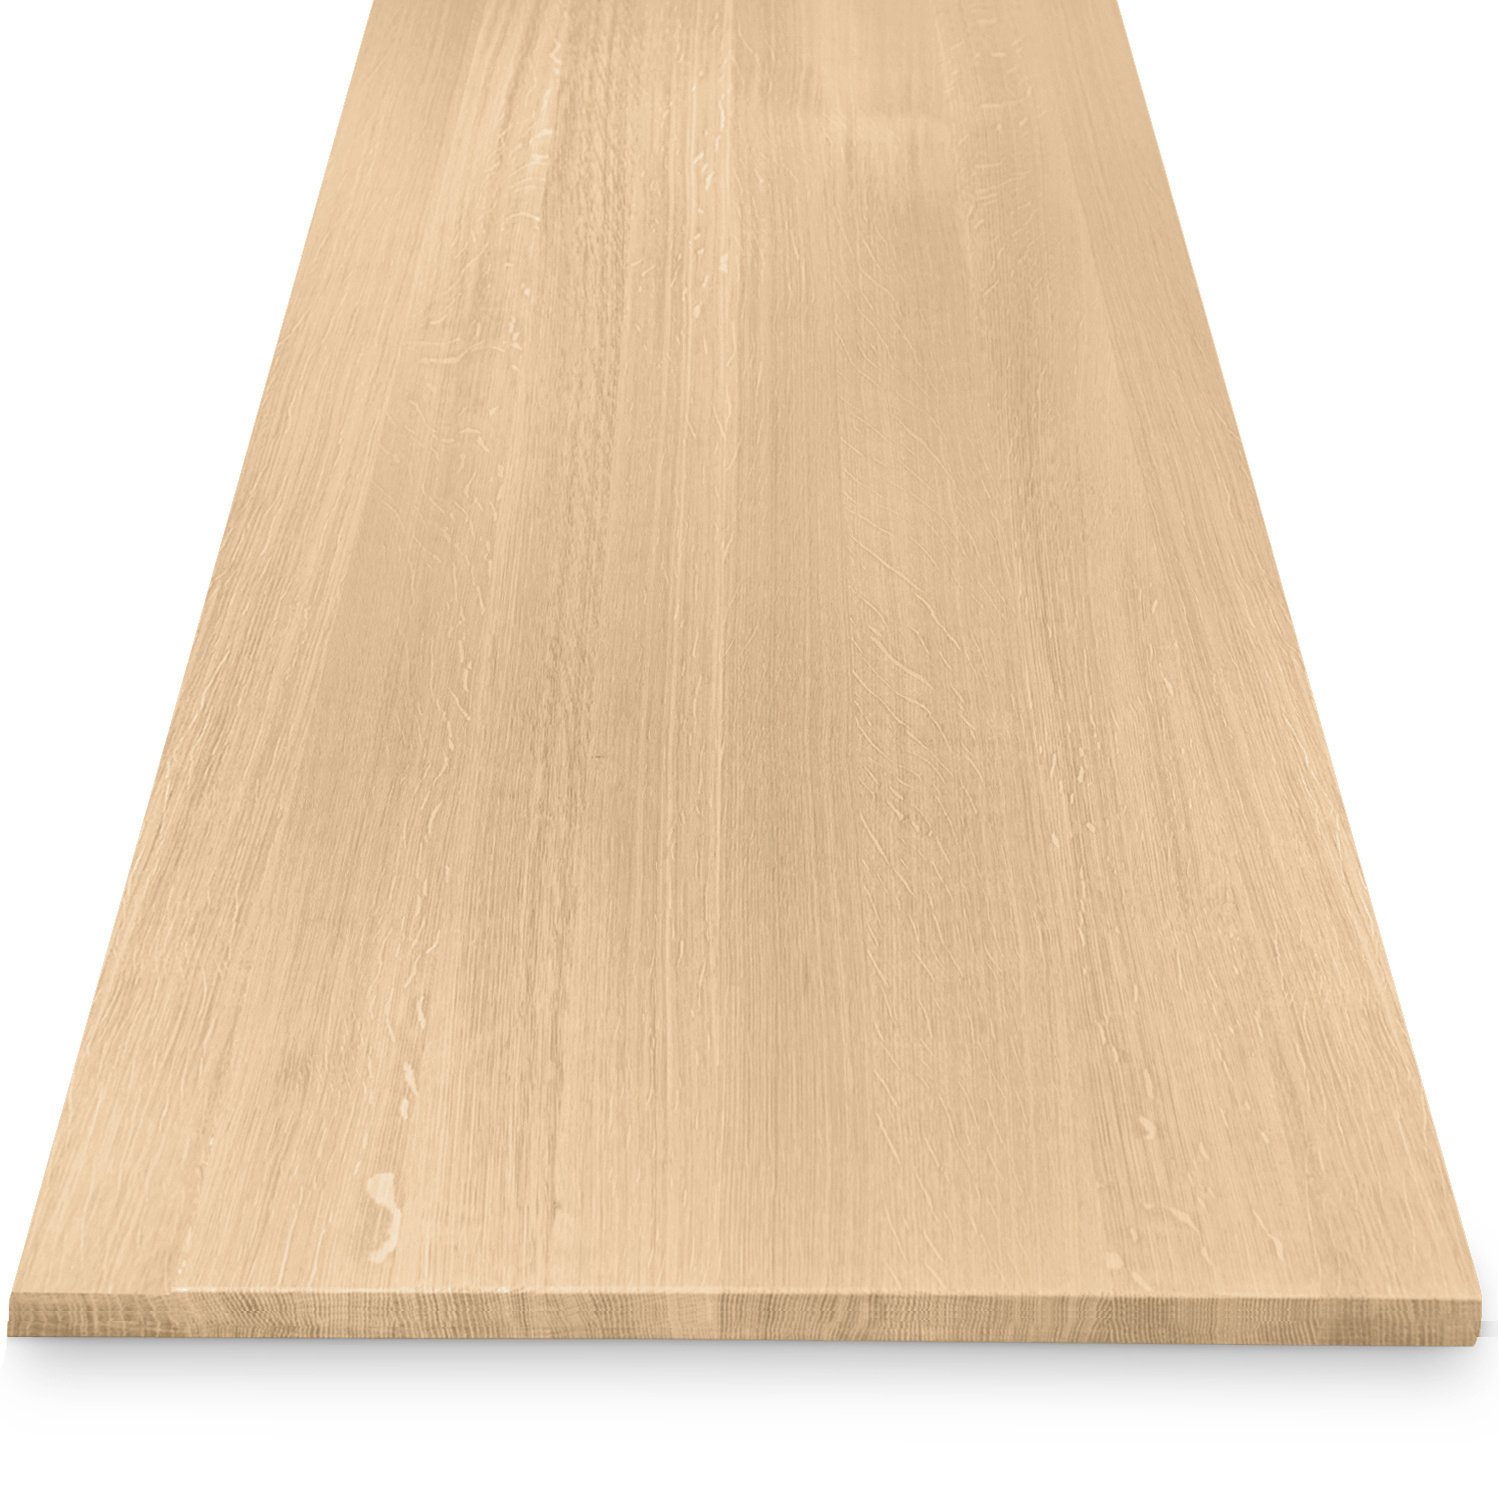  Eiken tafelblad op maat - 2,3 cm dik (1-laag) - foutvrij Europees eikenhout - verlijmd kd 8-12% - 50-120x50-300 cm